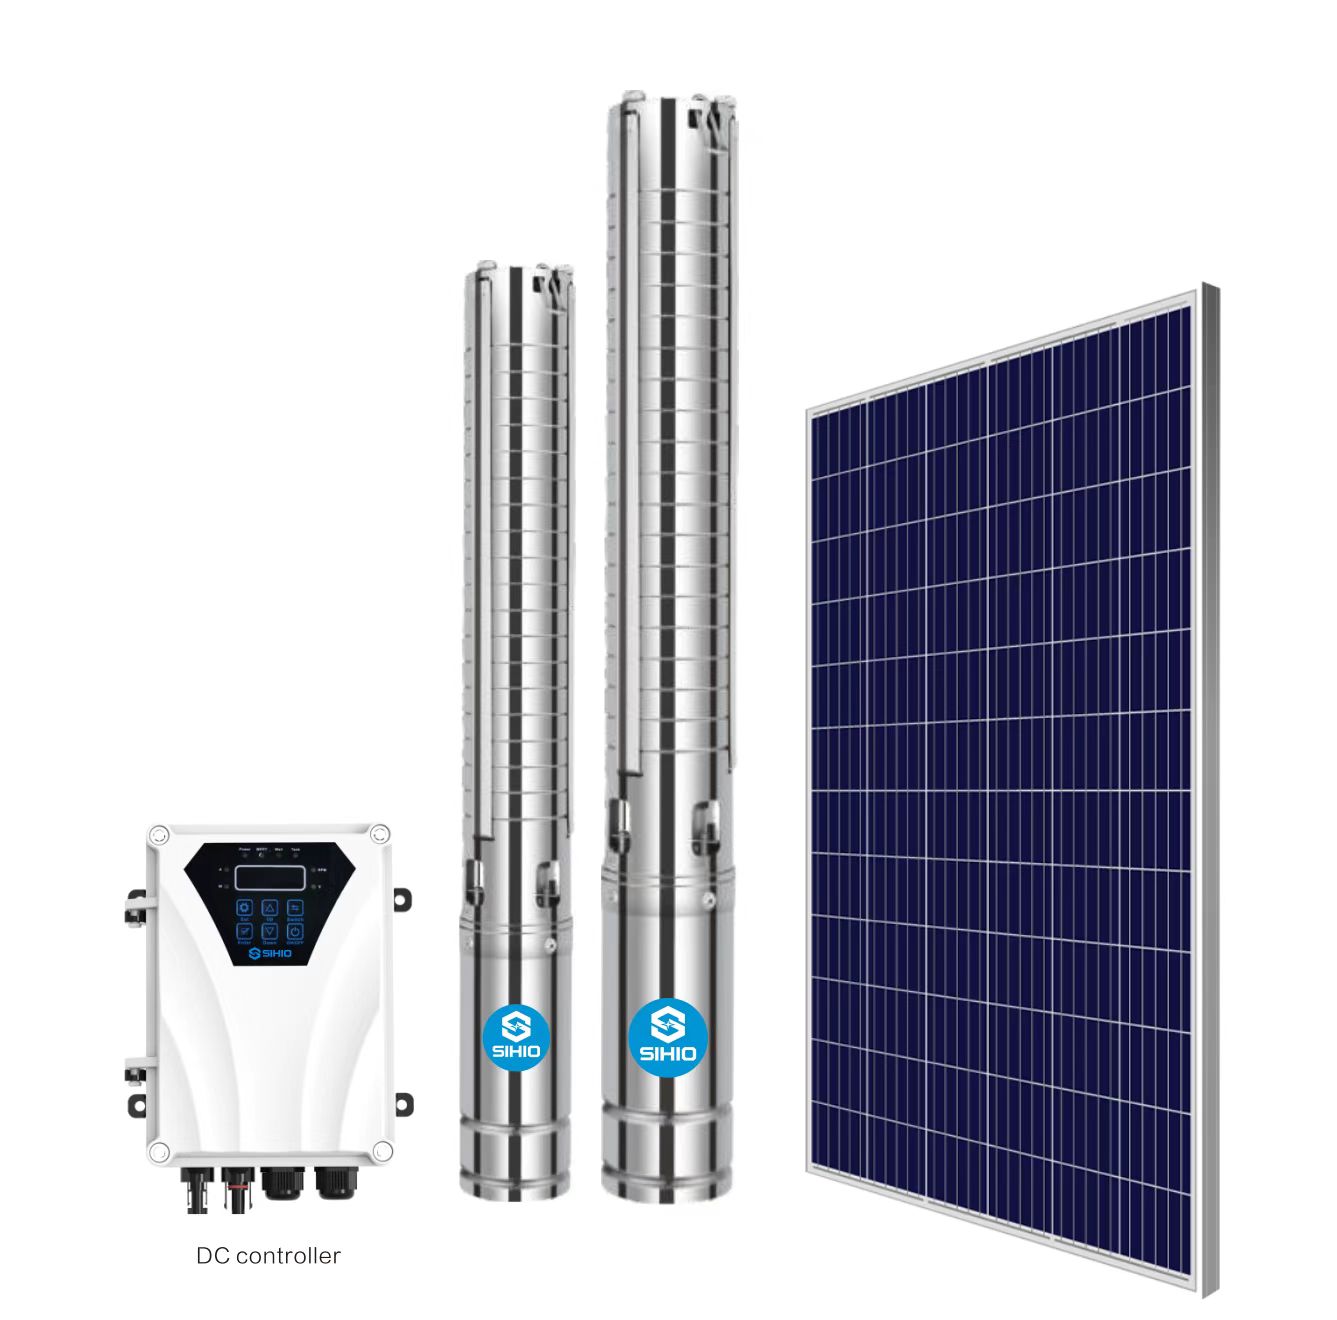 Solo DC Solar Pump Feedback from Greece